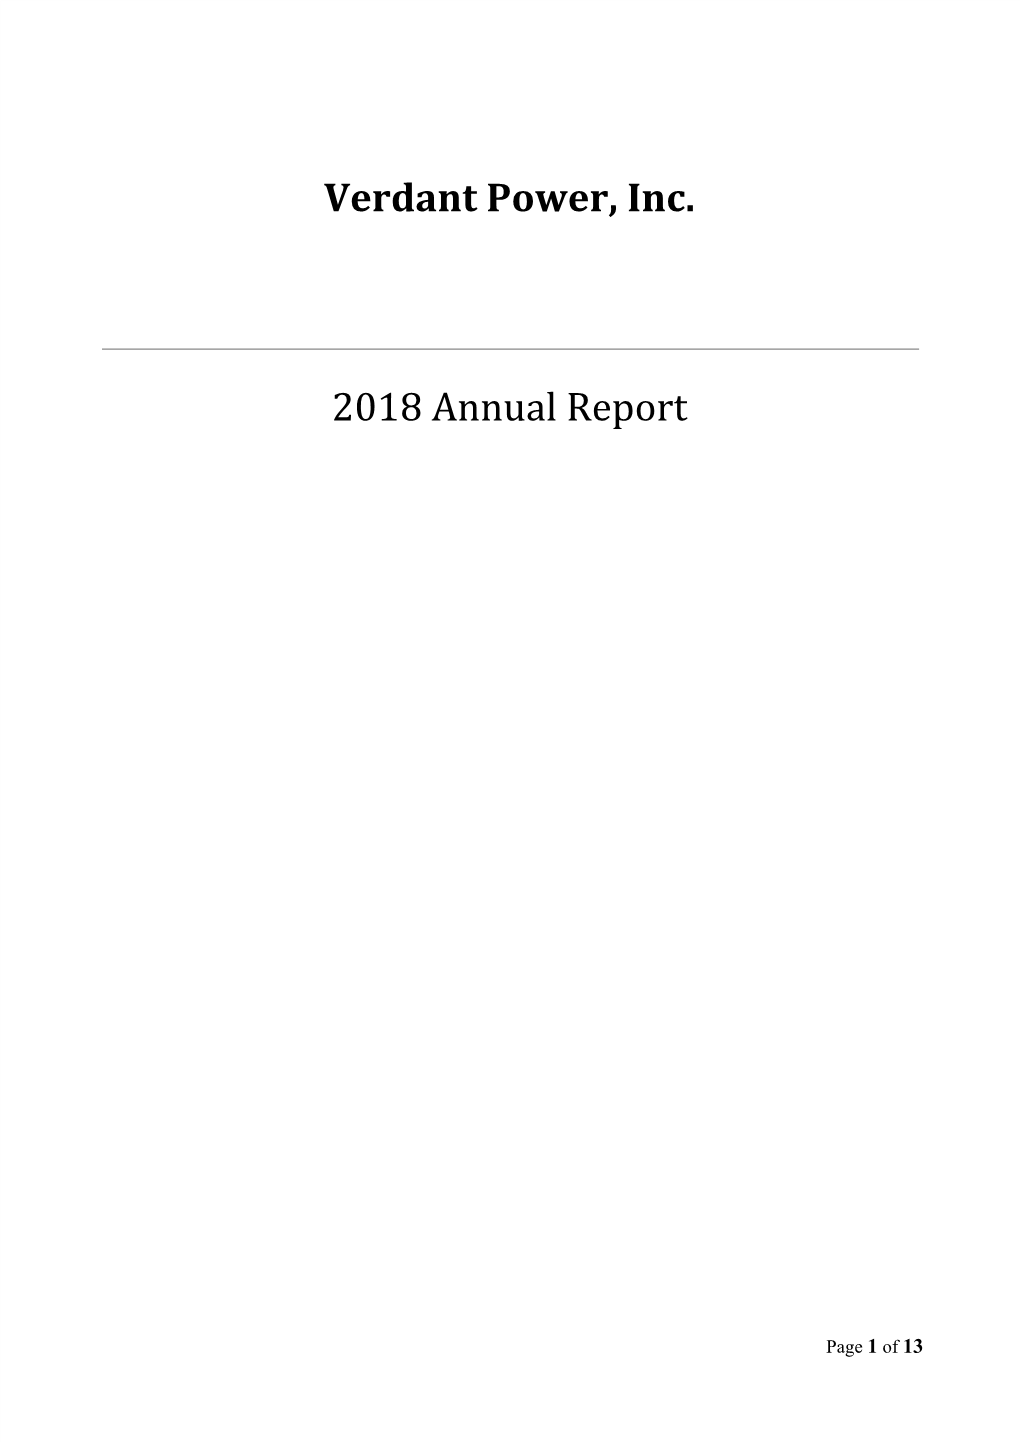 Verdant Power, Inc. 2018 Annual Report